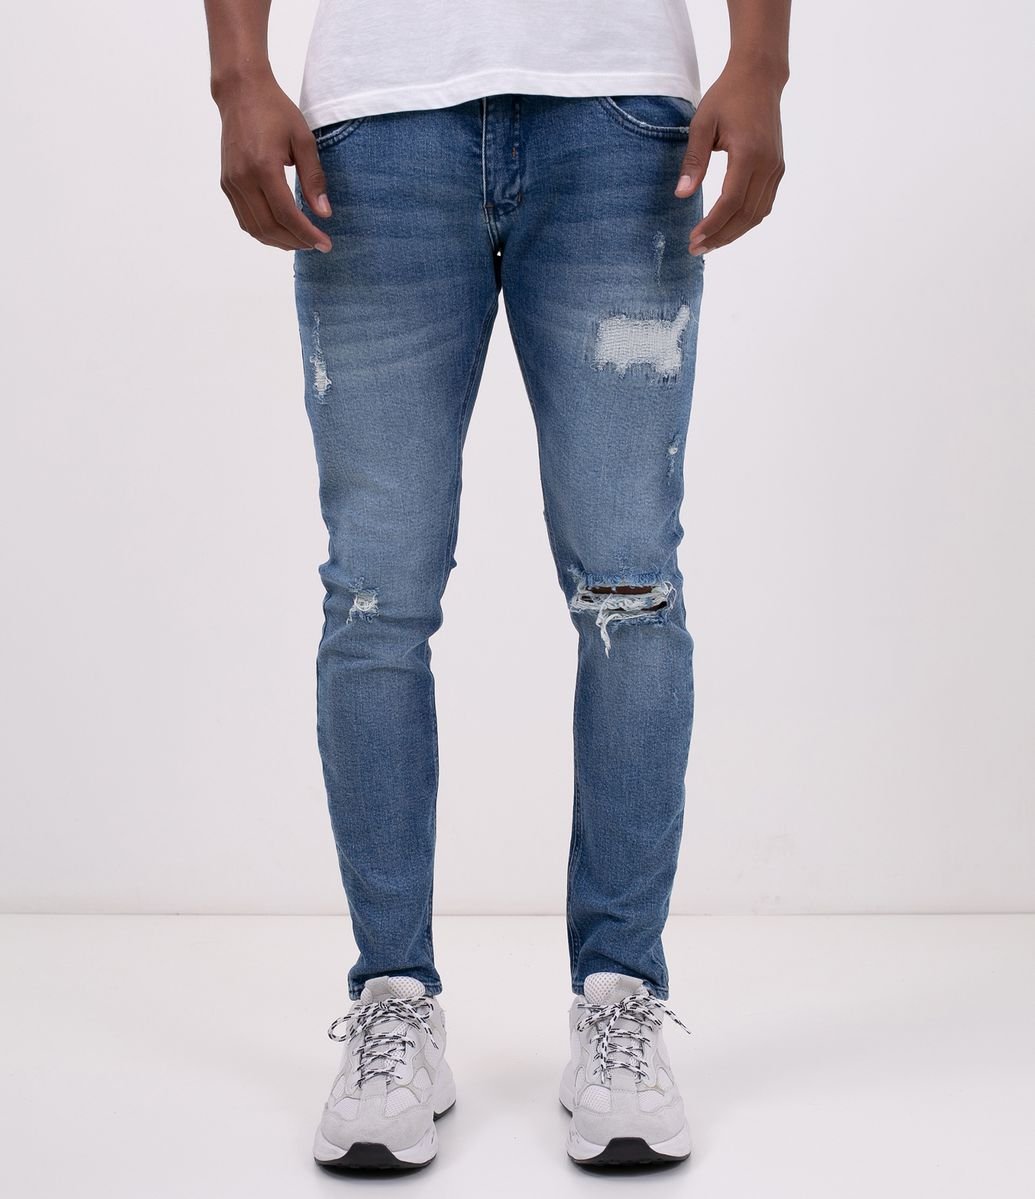 lojas renner calças jeans masculinas